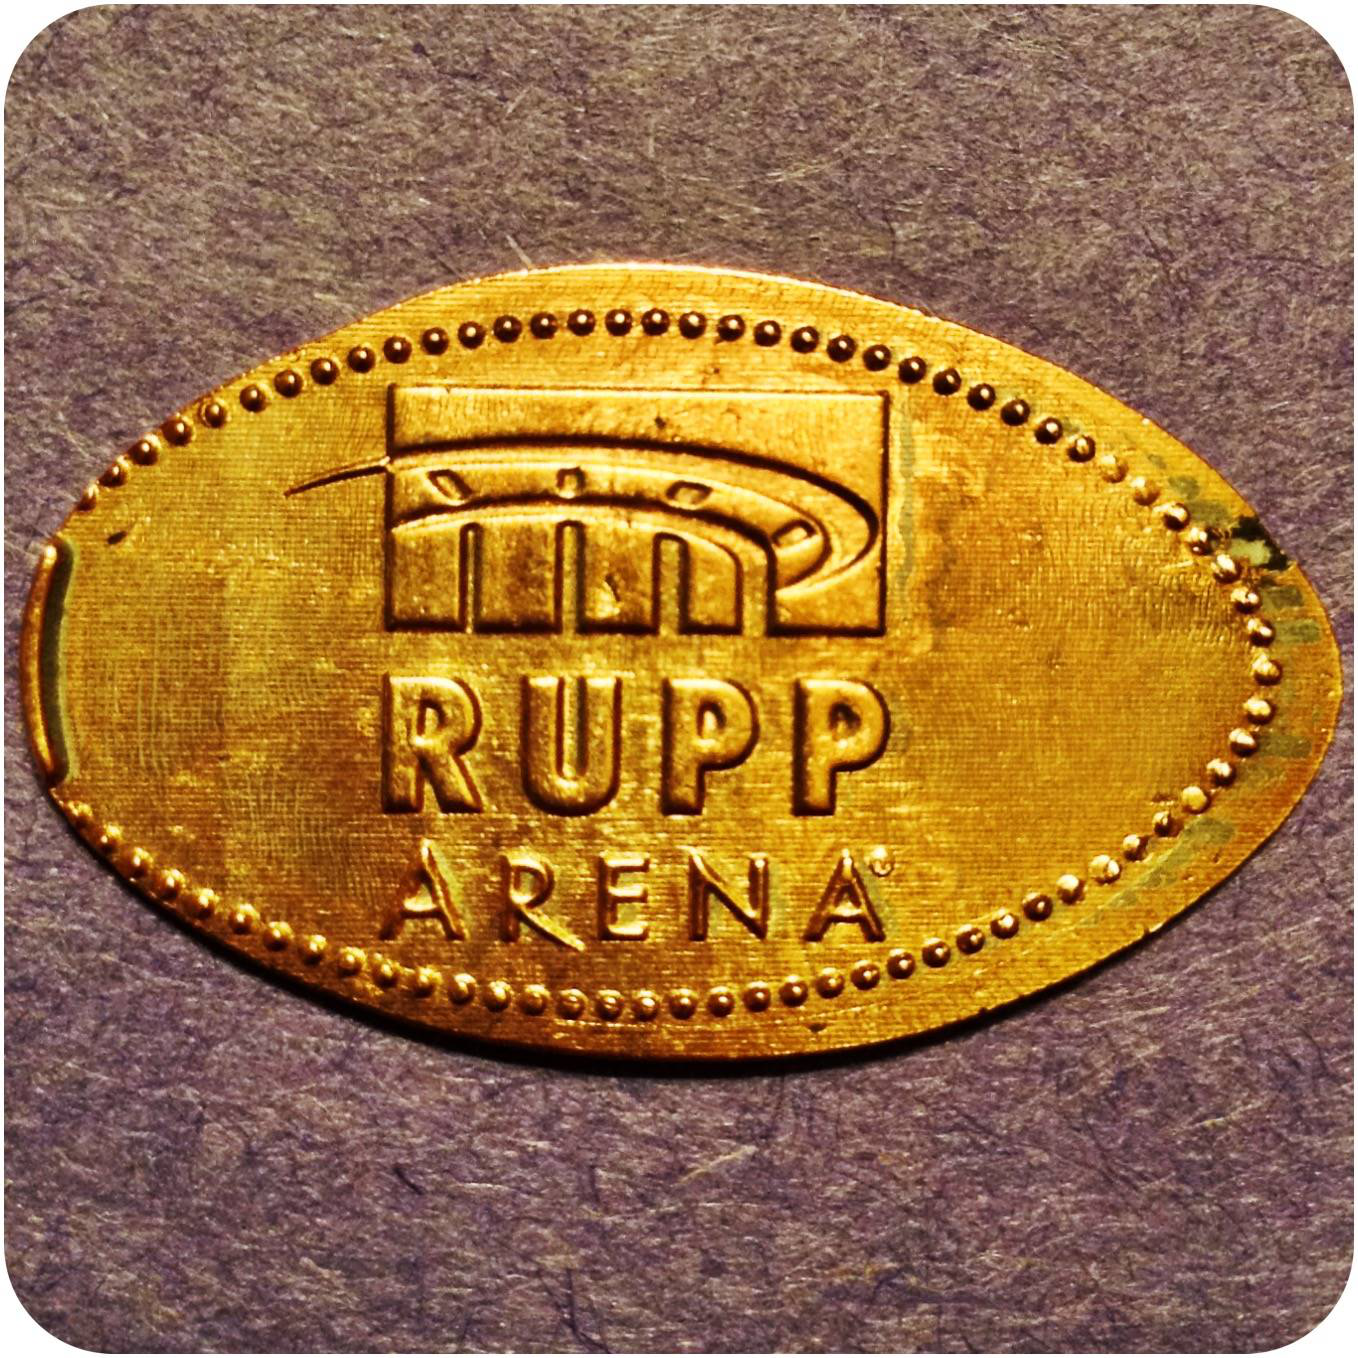 Legendary Facility Rupp Arena - Food Court, Lexington Center, Lexington Kentucky